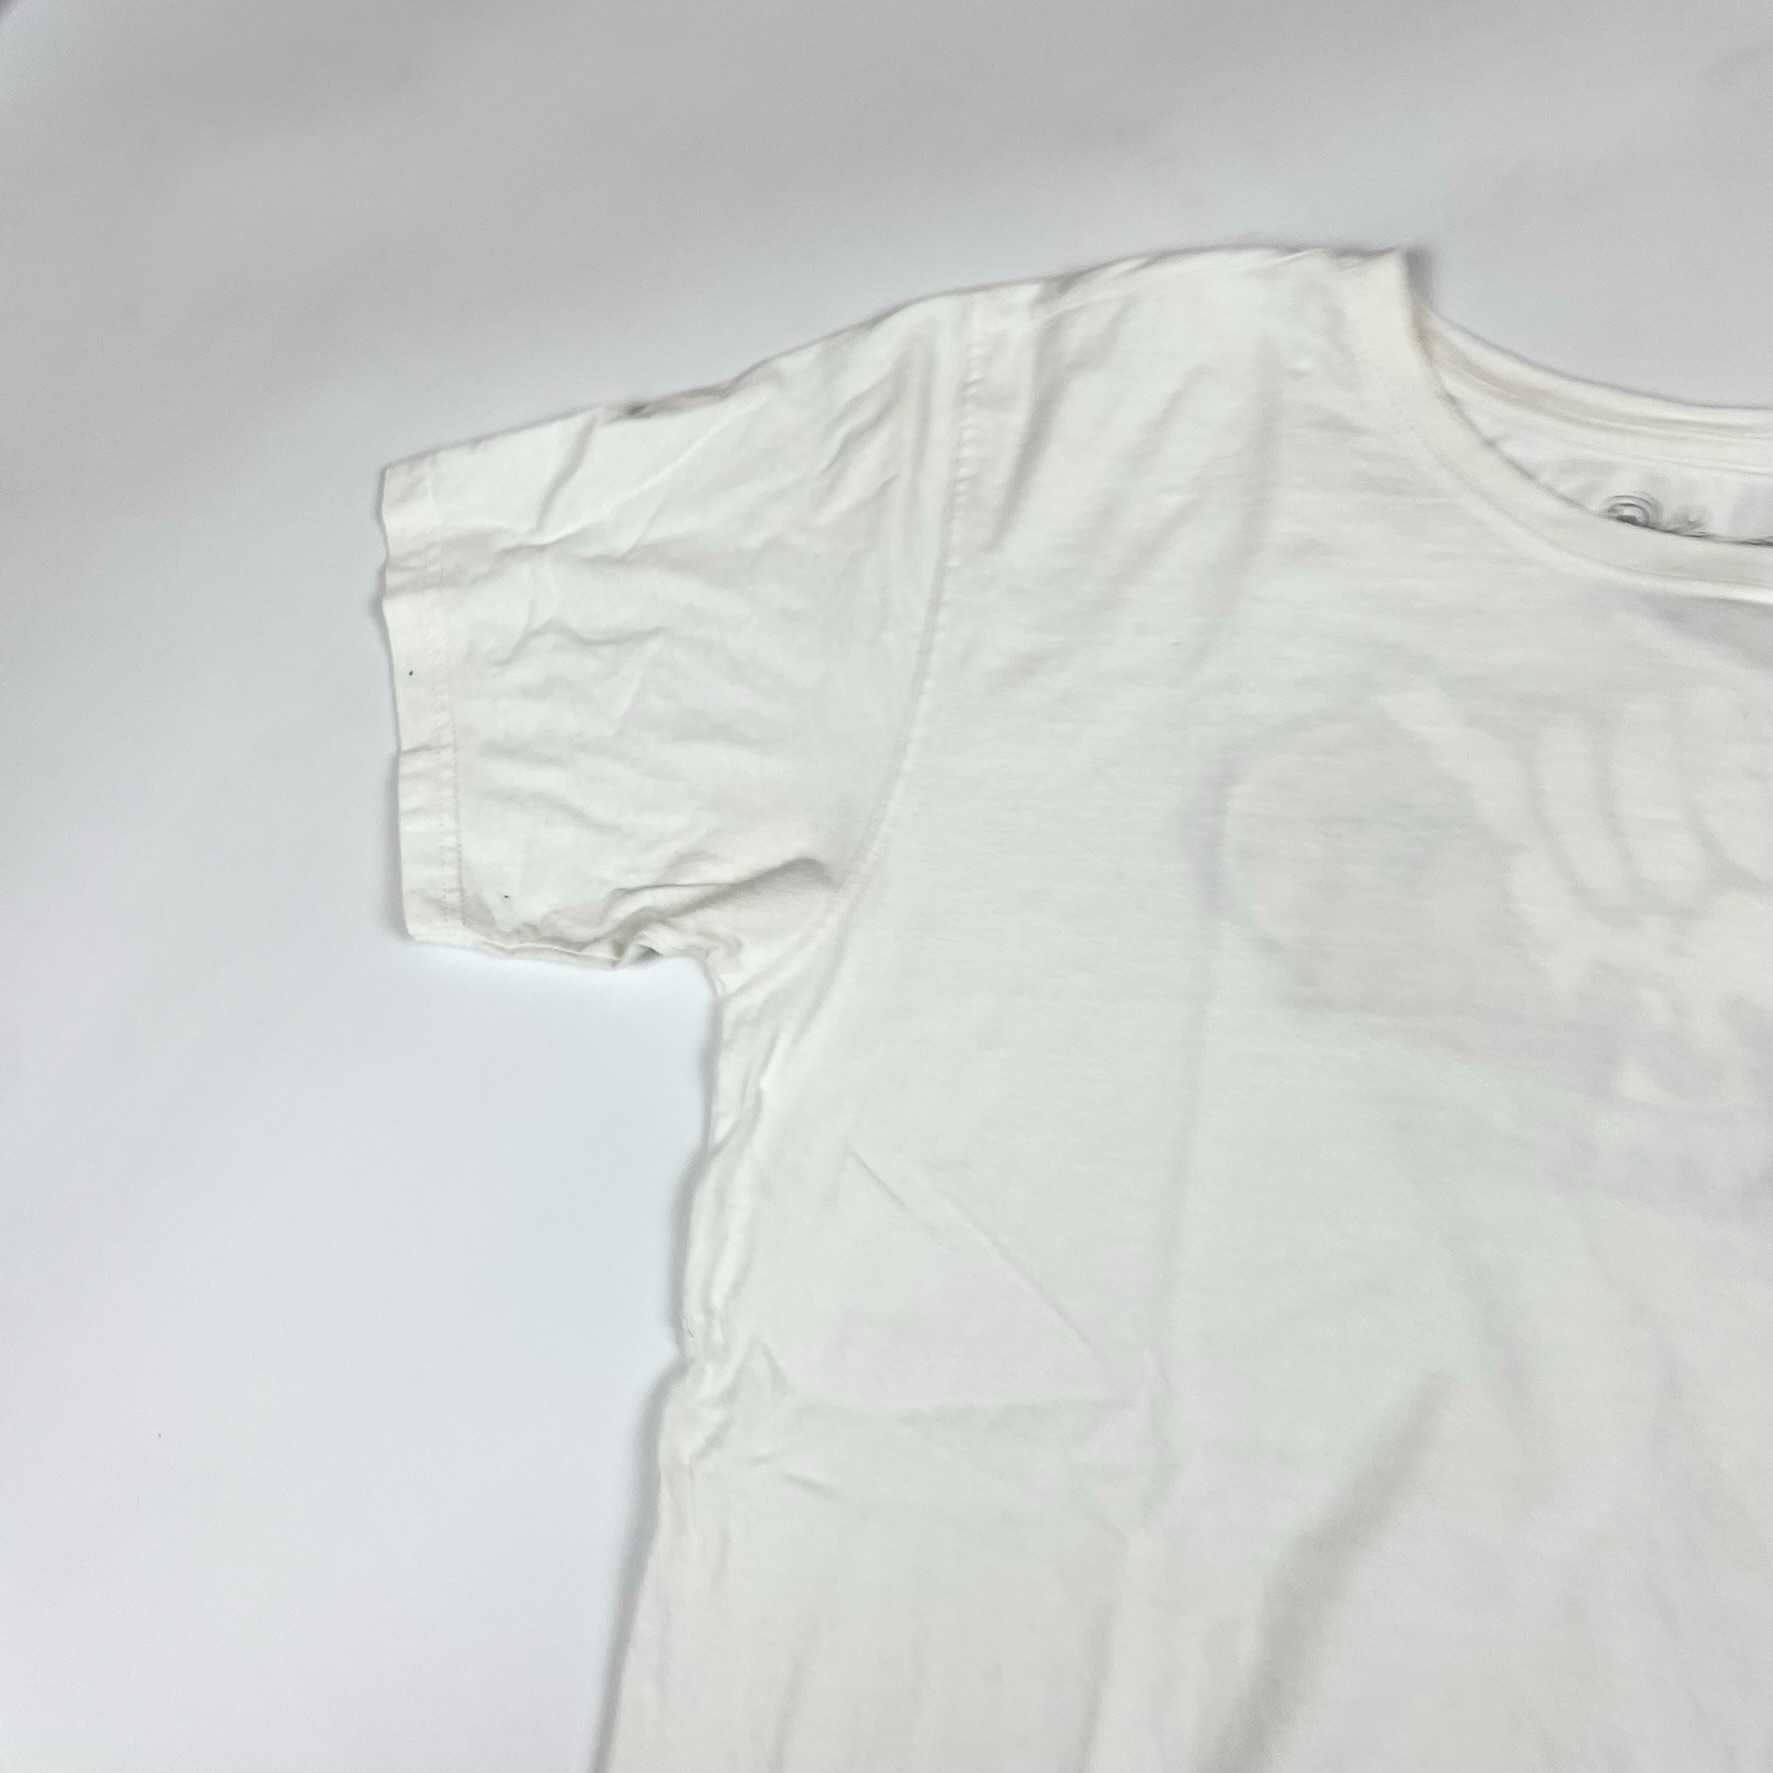 Vintage "surf riders" white T-shirt koszulka z dużym retro nadrukiem